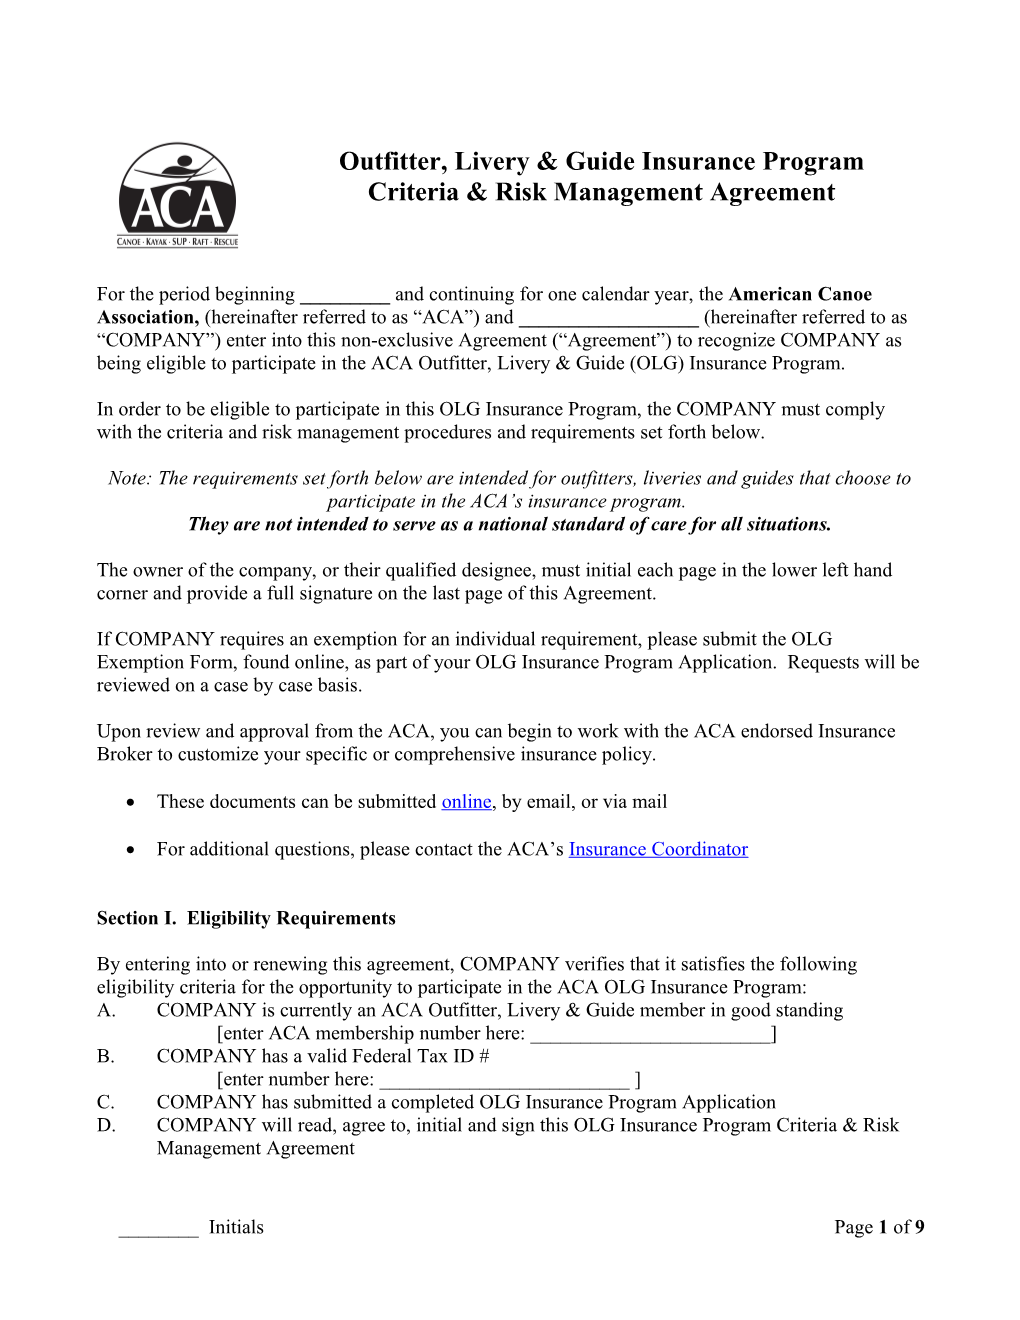 ACA OLG Insurance Program Criteria & Risk Management Agreement